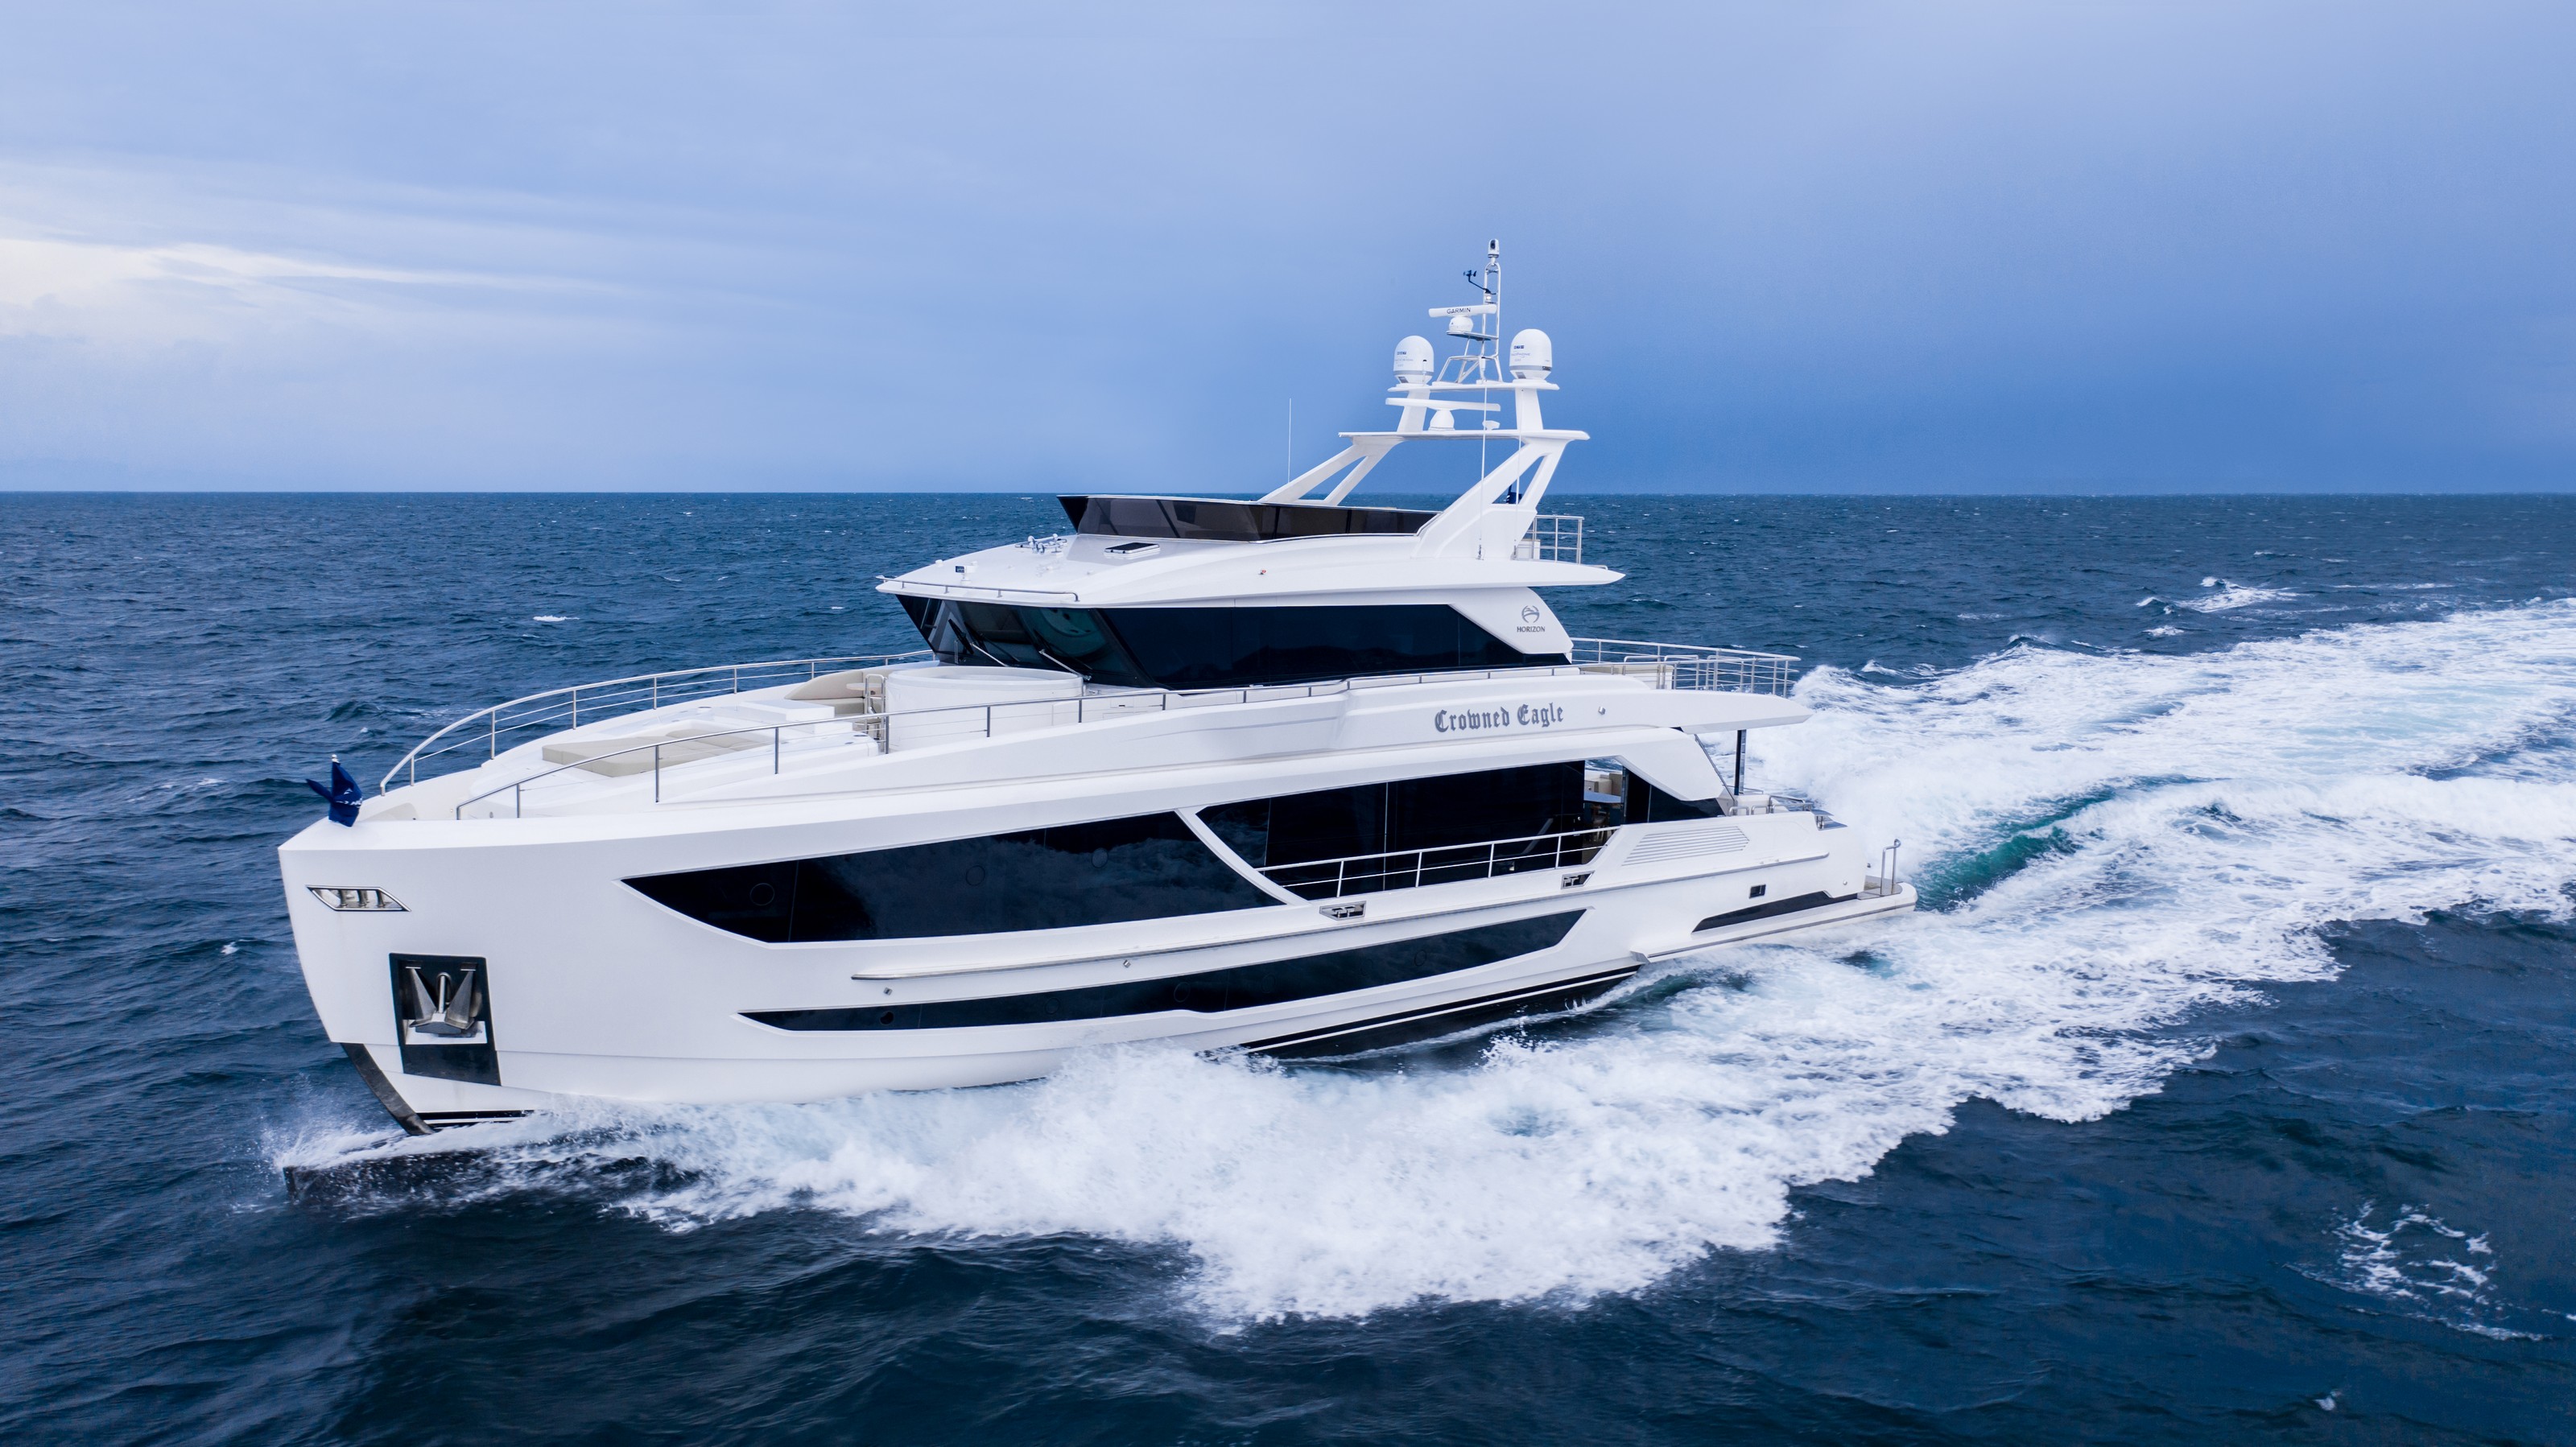 new horizon yacht brokers guernsey